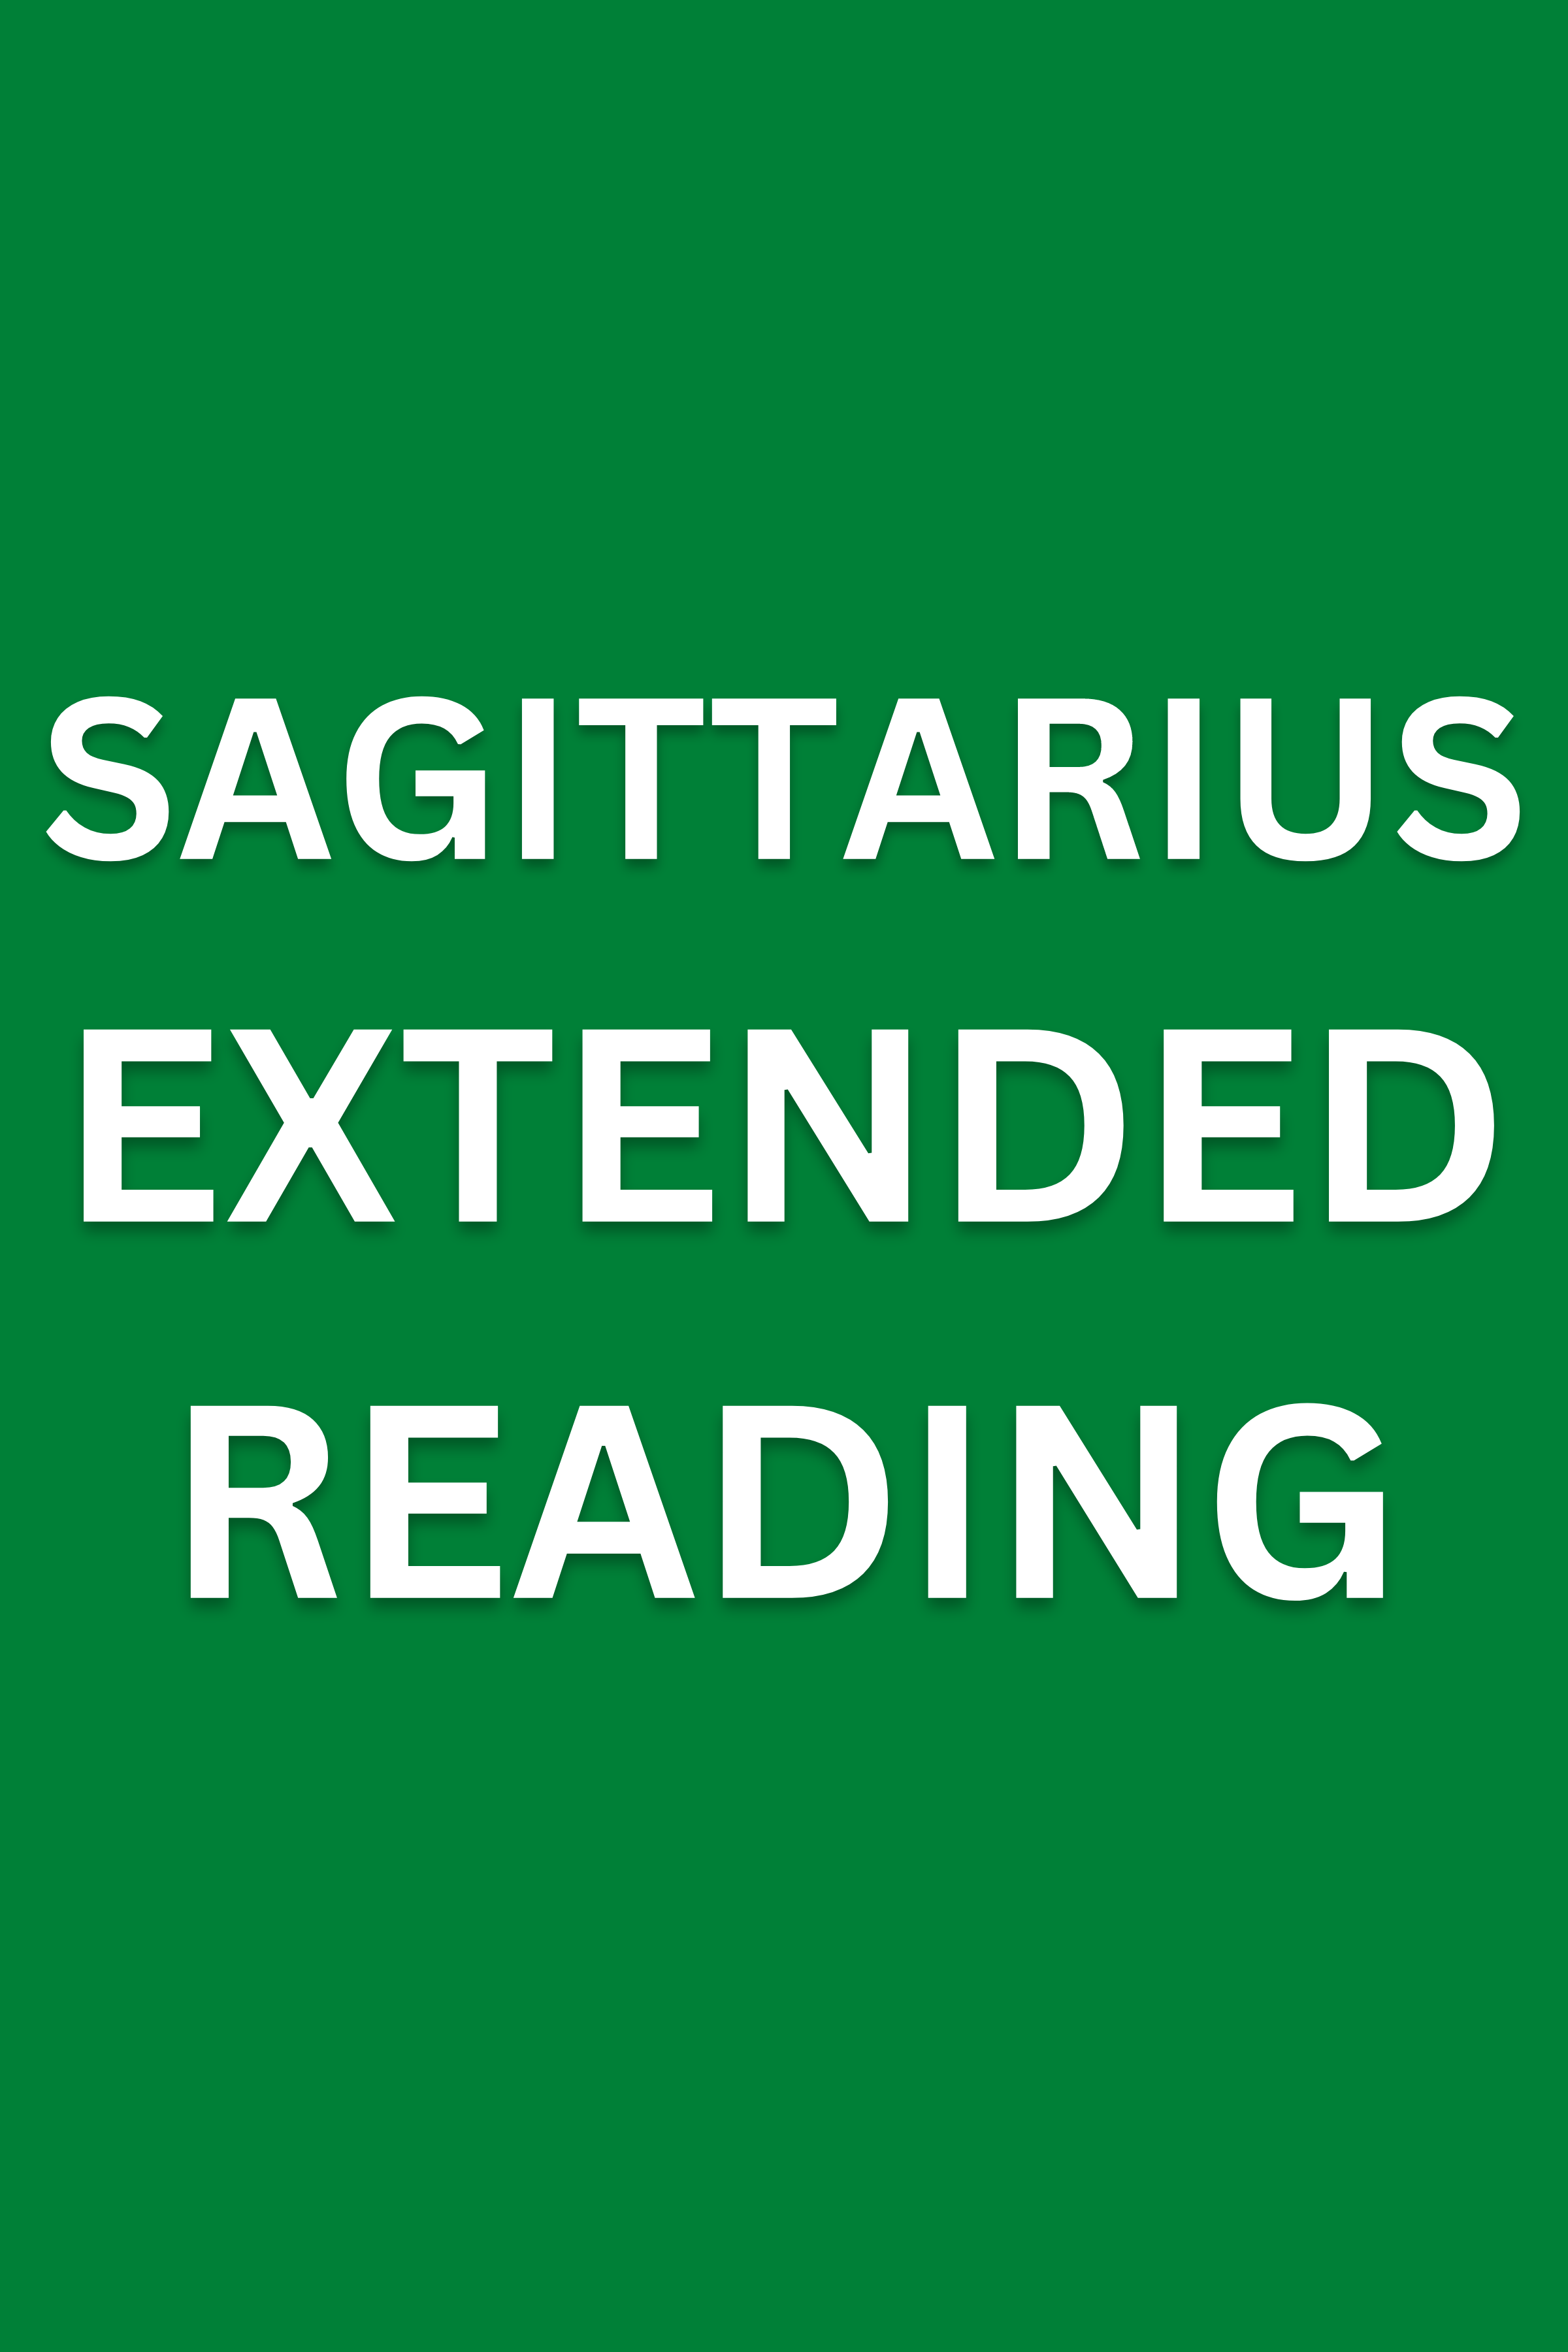 Sagittarius | February 1-8 Weekly Tarot Reading